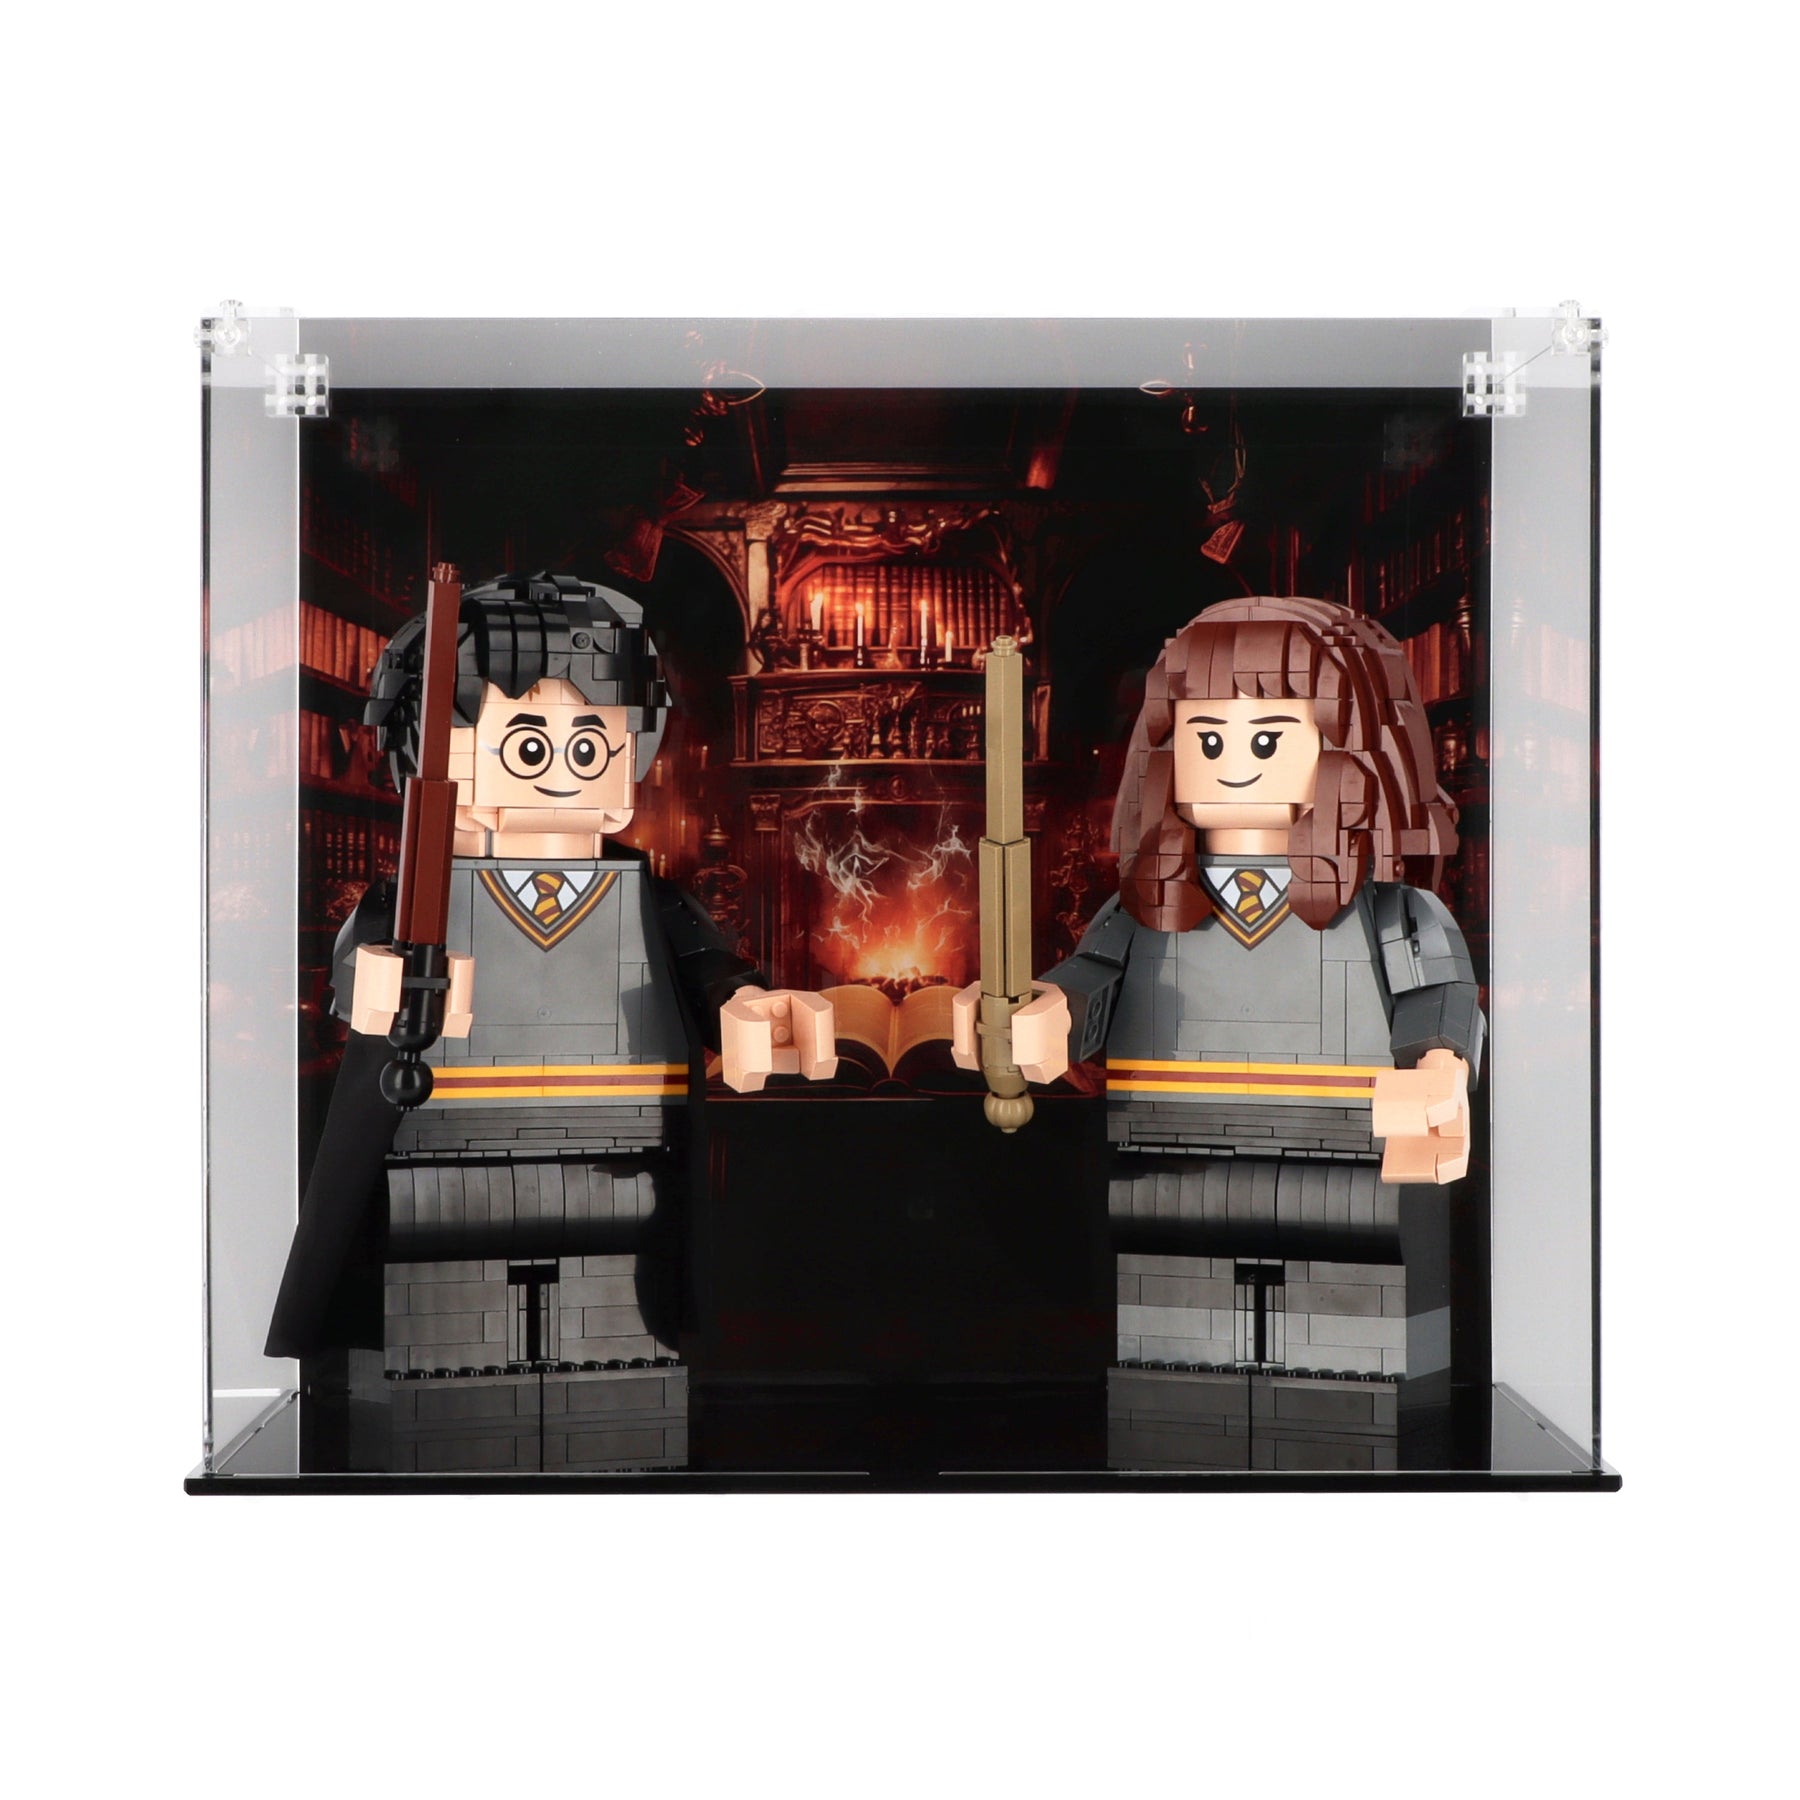 LEGO 76393 Harry Potter & Hermione Granger - LEGO Harry Potter